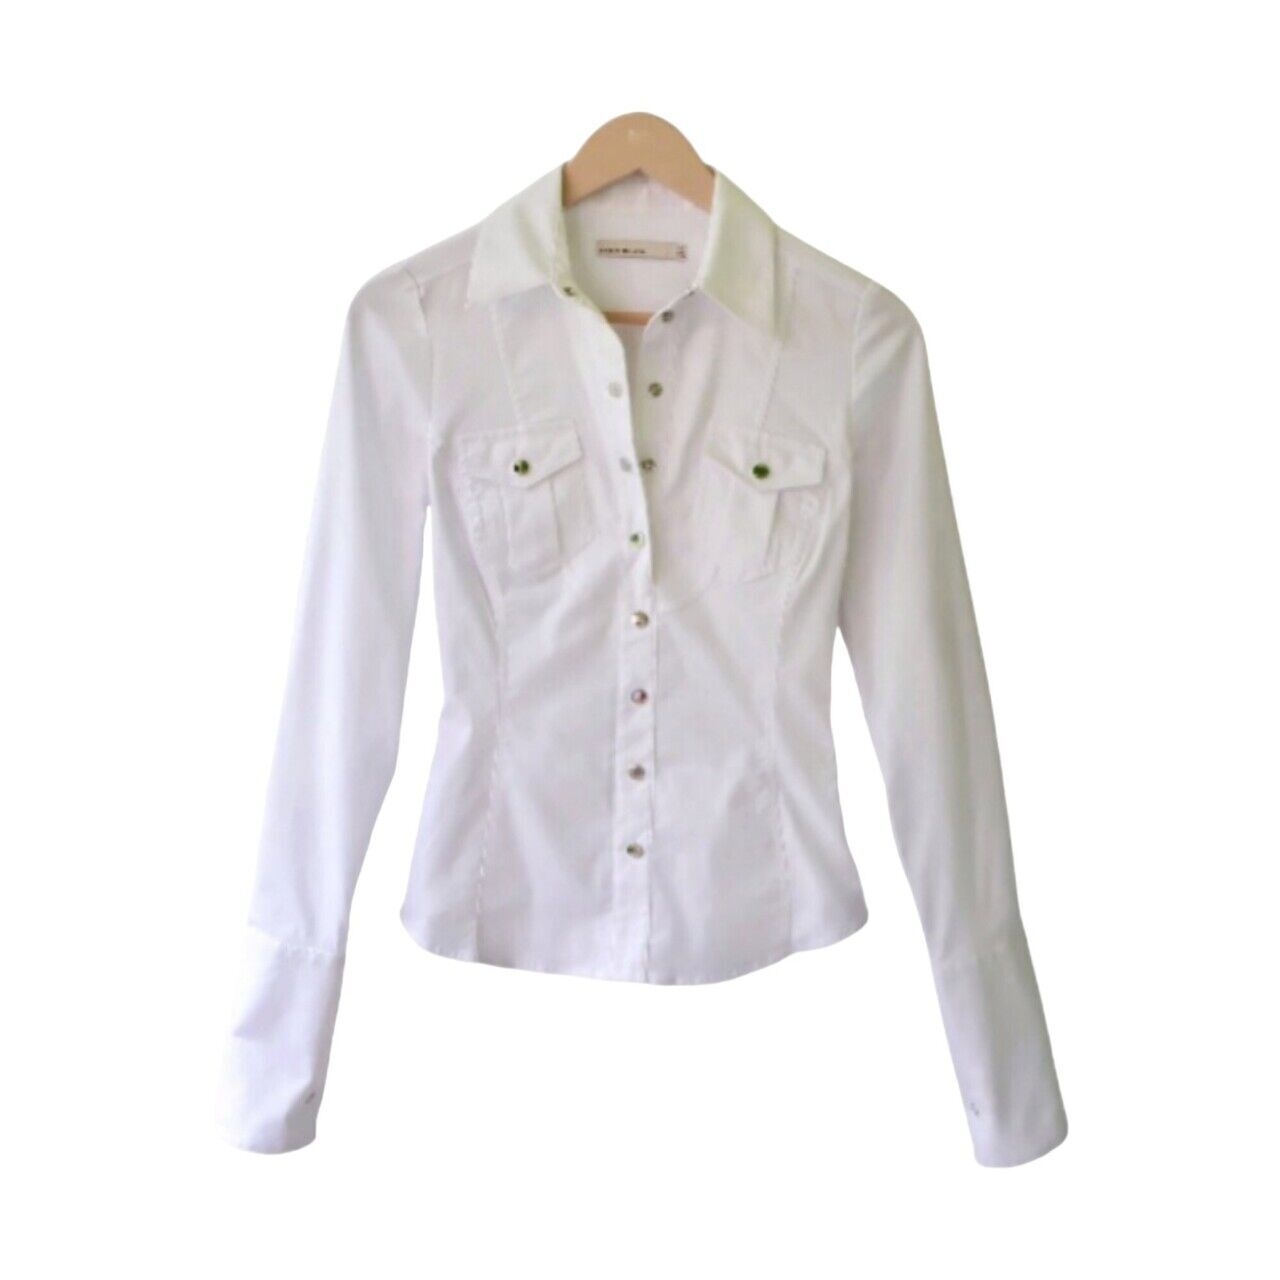 Karen Millen White Shirt